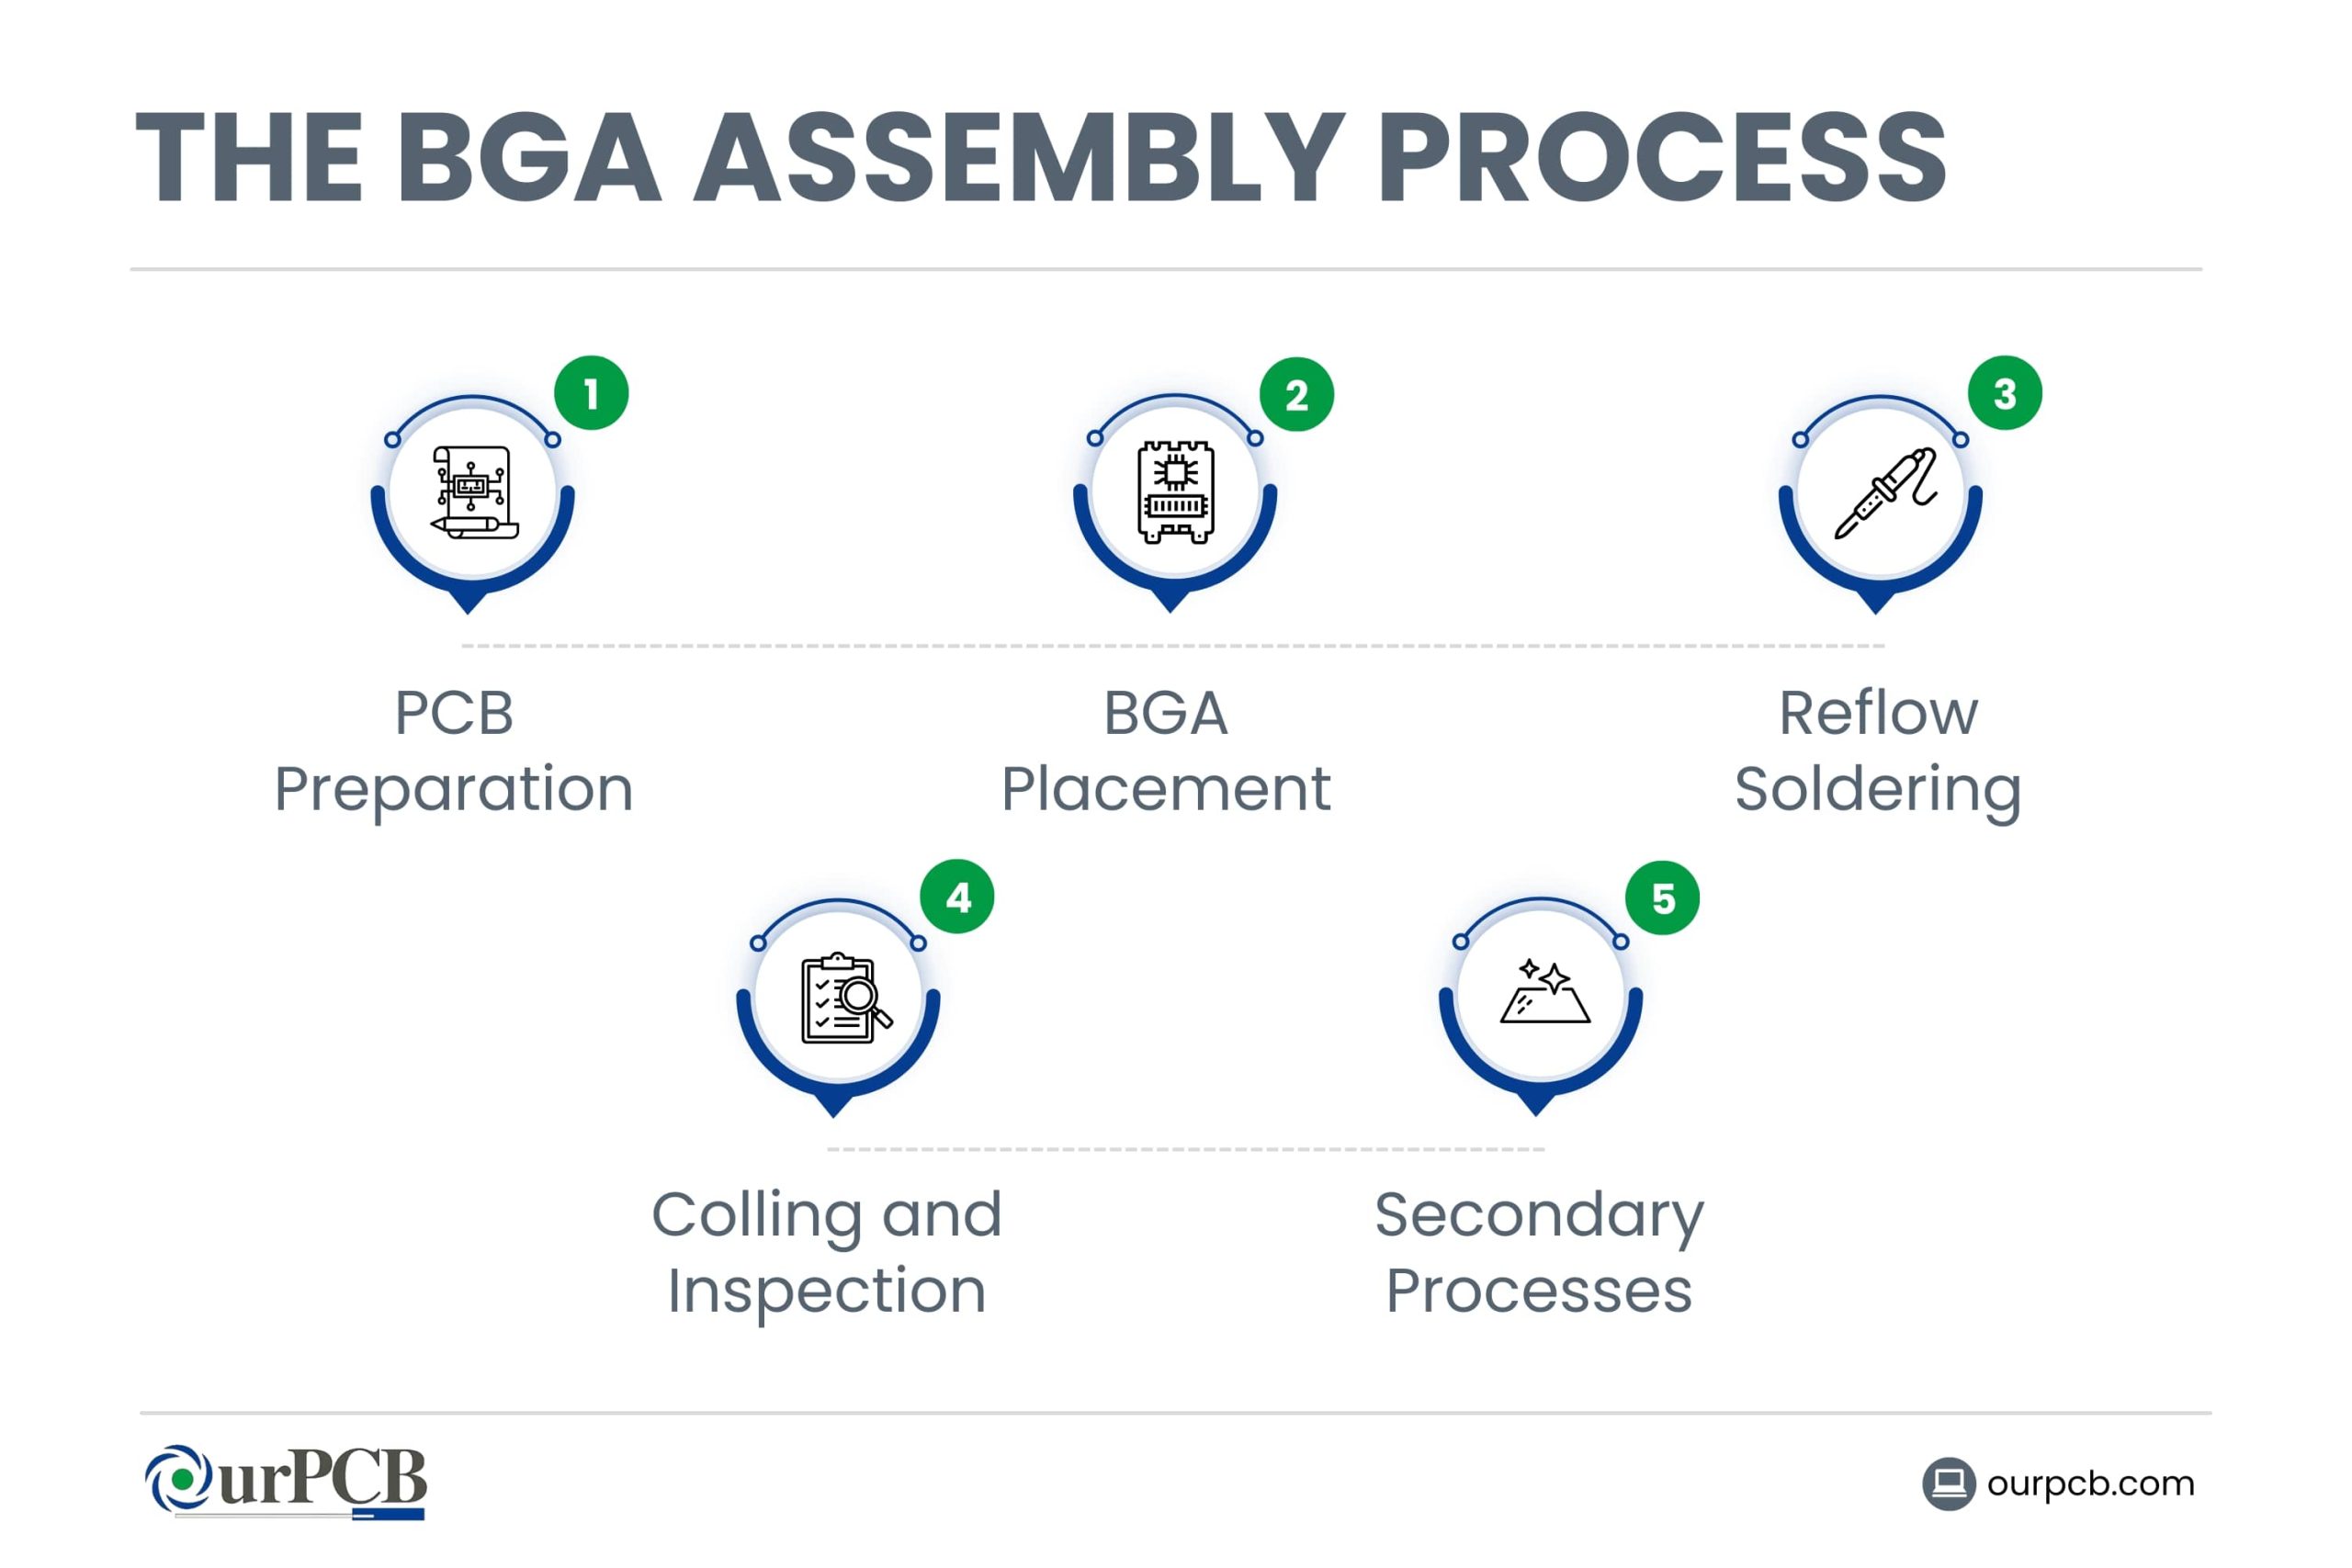 The BGA Assembly Process